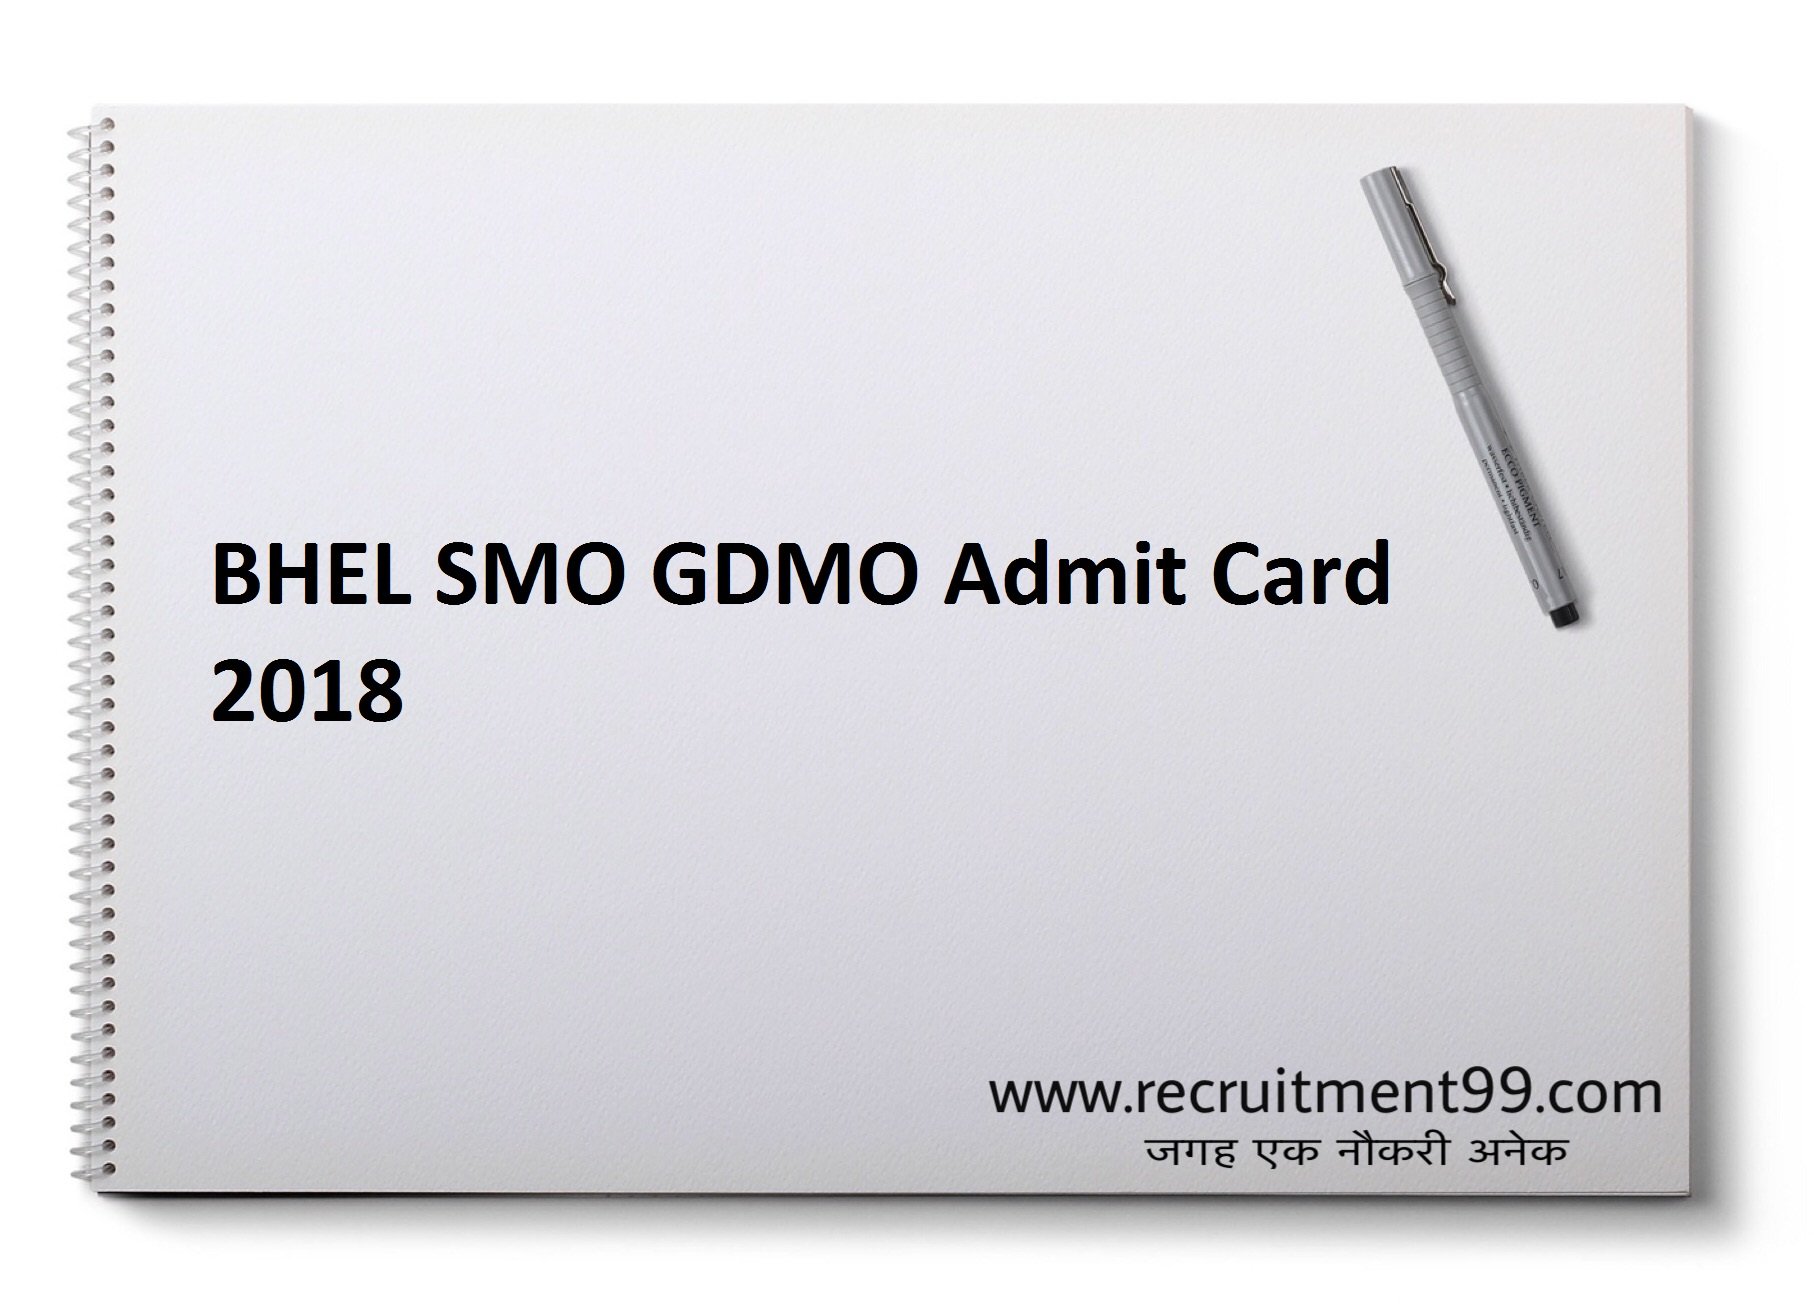 BHEL SMO GDMO Recruitment Admit Card & Result 2018